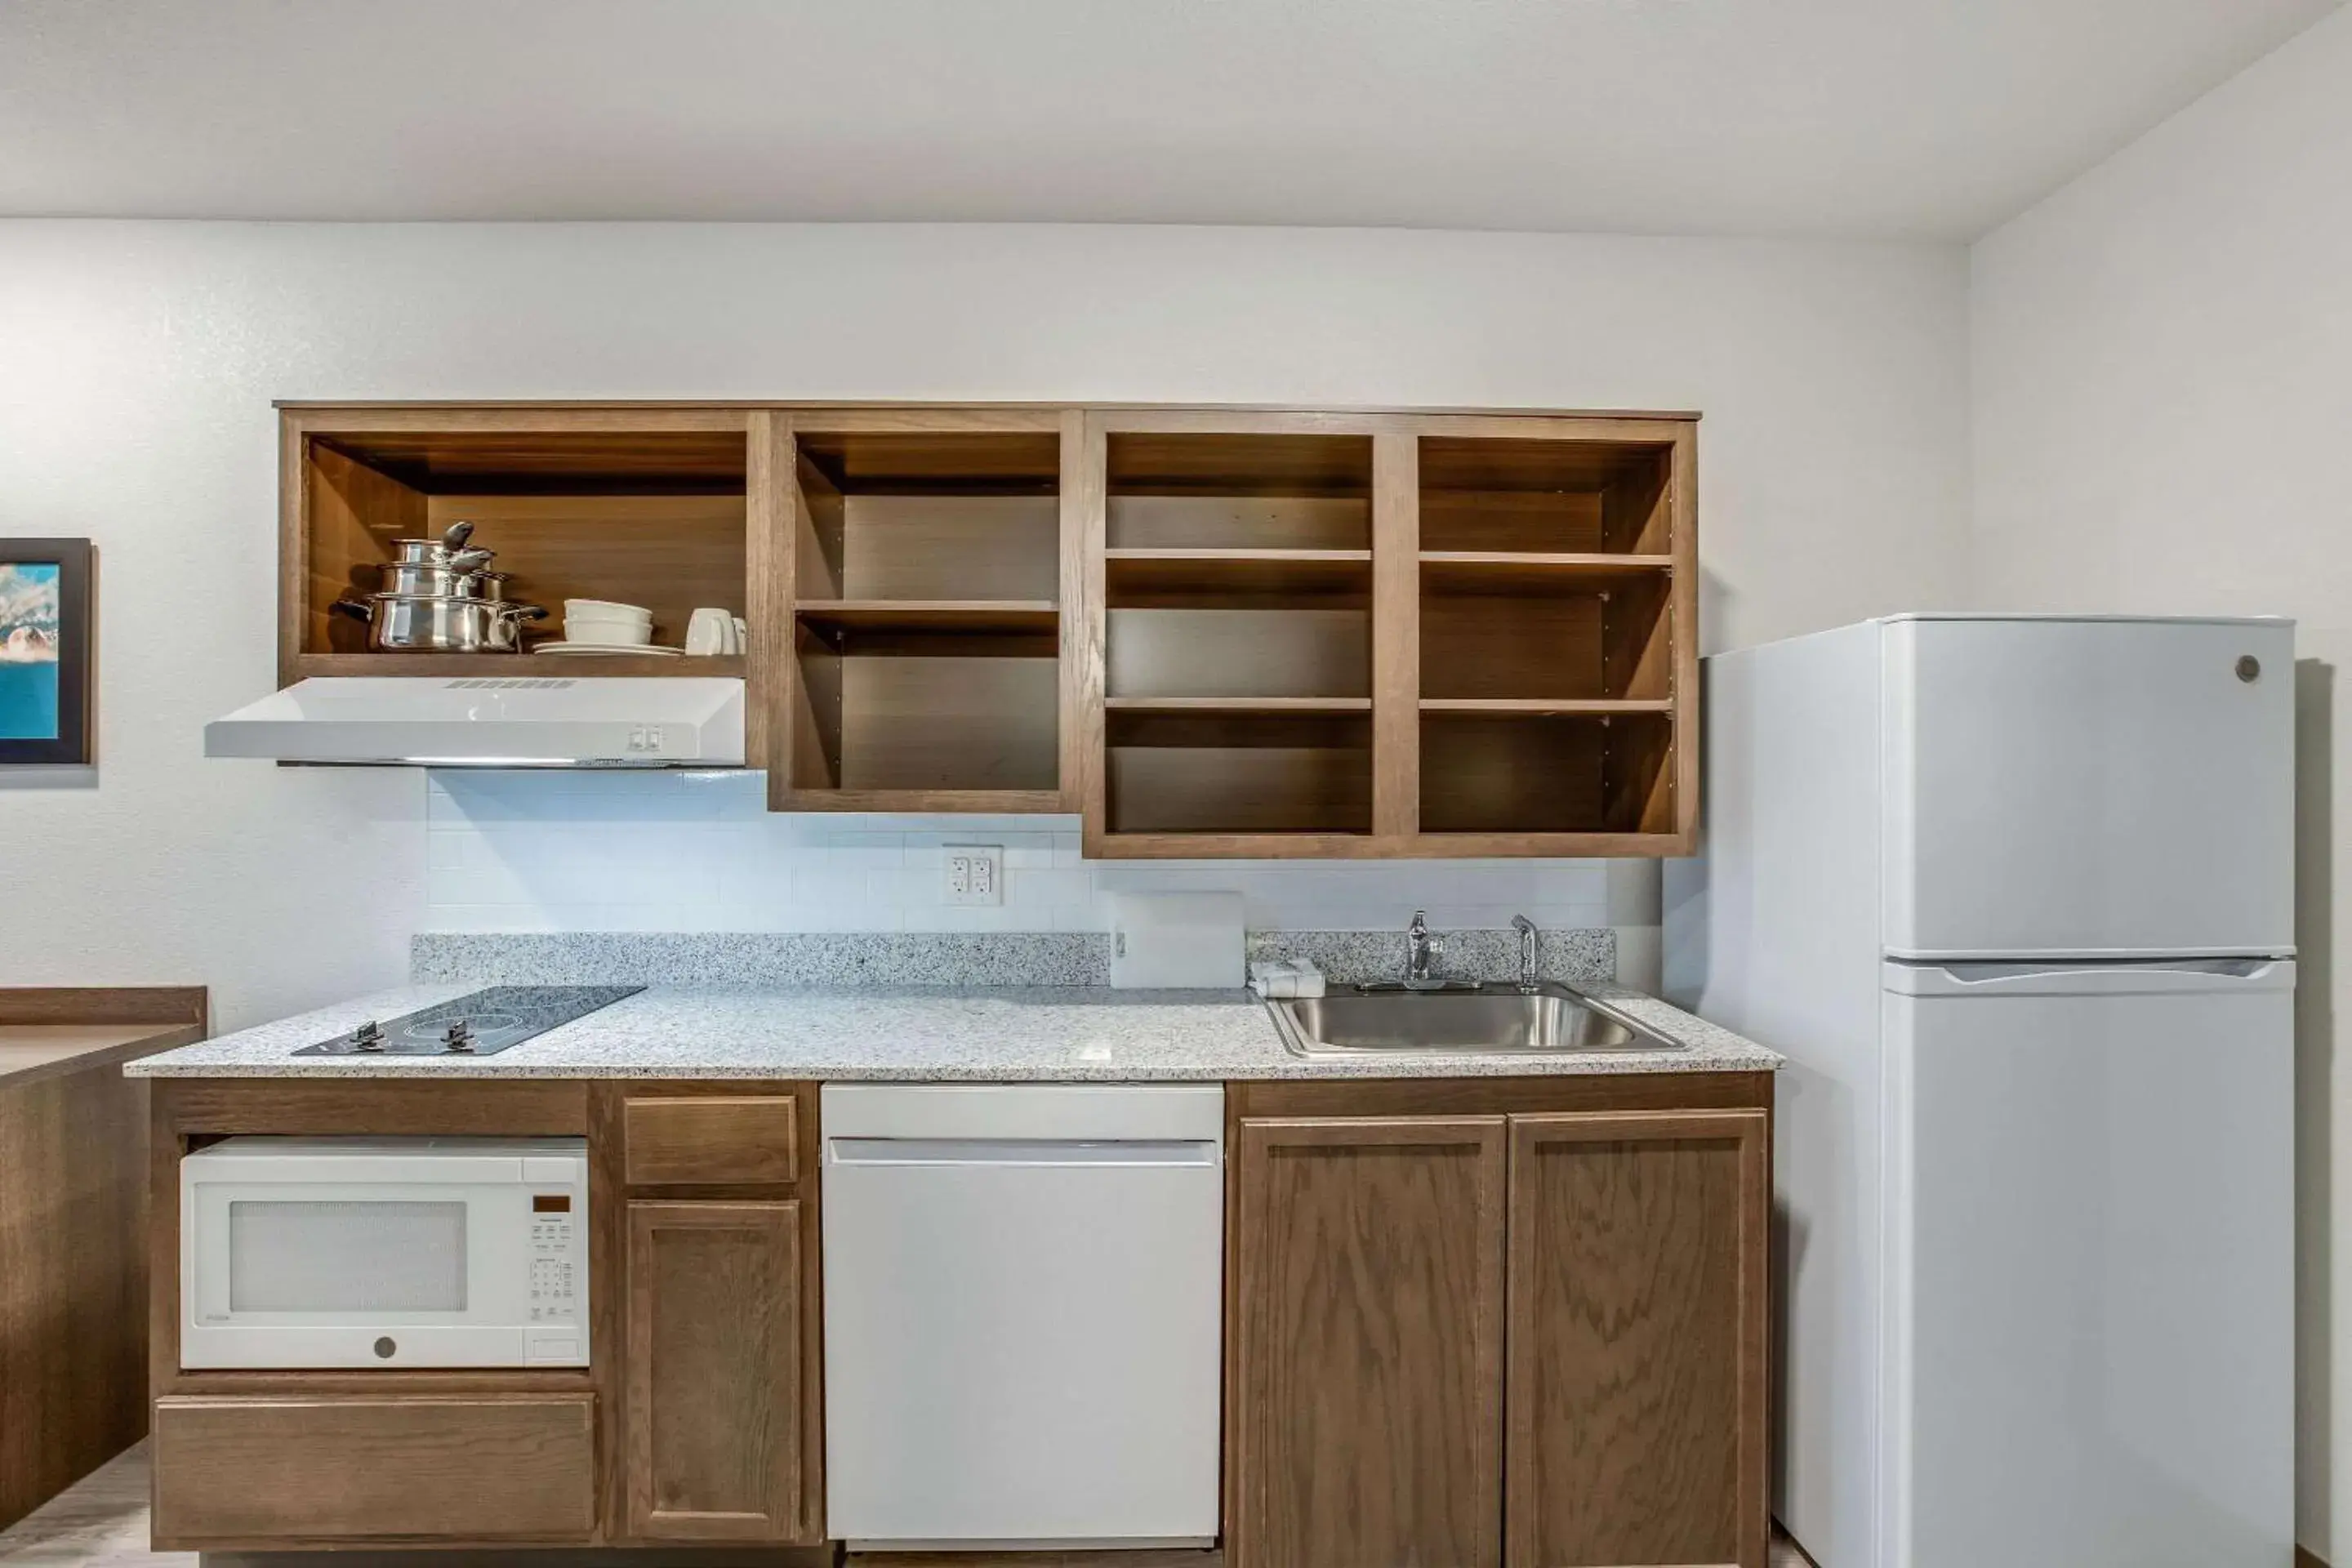 Photo of the whole room, Kitchen/Kitchenette in WoodSpring Suites Detroit Farmington Hills